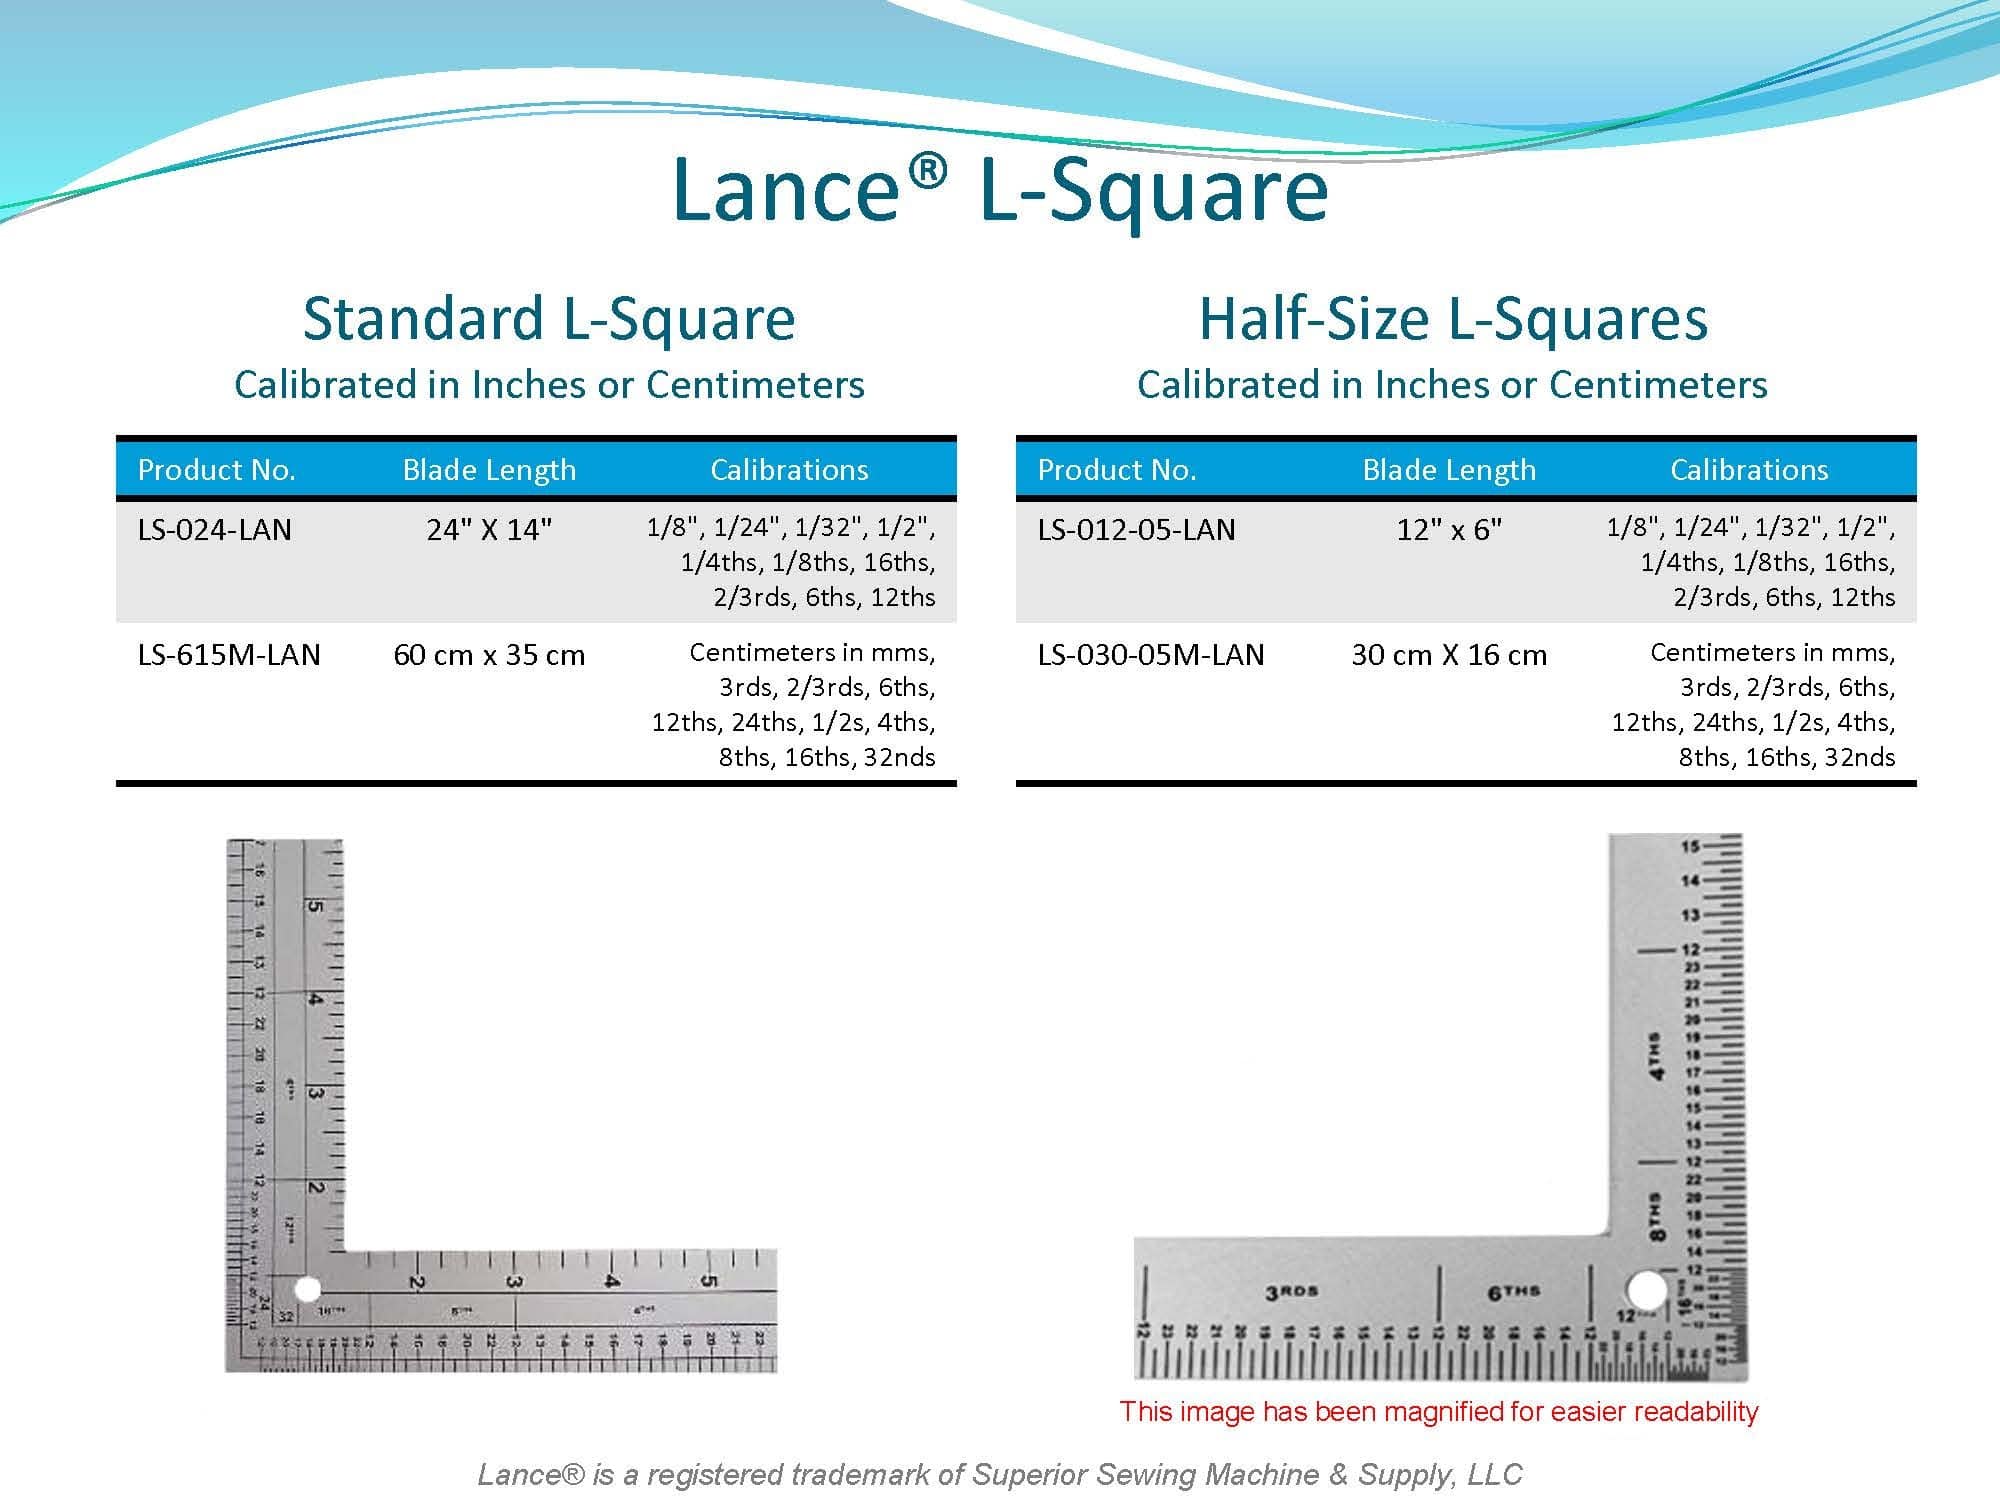 LANCE L-SQUARE  
STANDARD L-SQUARE
CALIBRATED IN INCHES or METRIC
LS-024-LAN 24" X 14"
LA-615M-LAN 60cm X 35cm
HALF-SIZE STANDARD L-SQUARE
